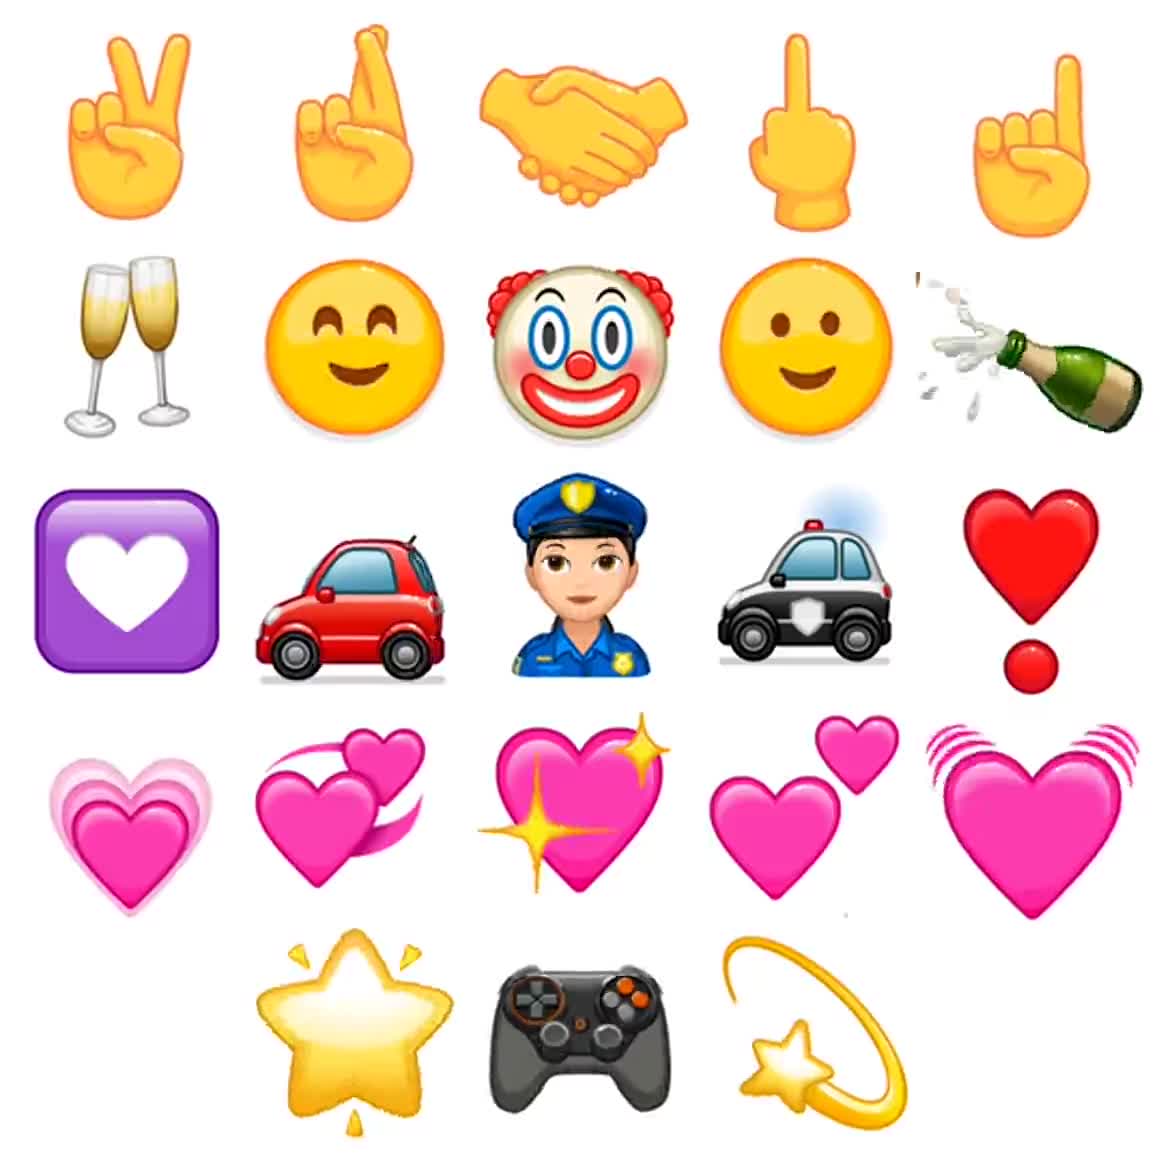 Как добавить emoji в телеграмм фото 90